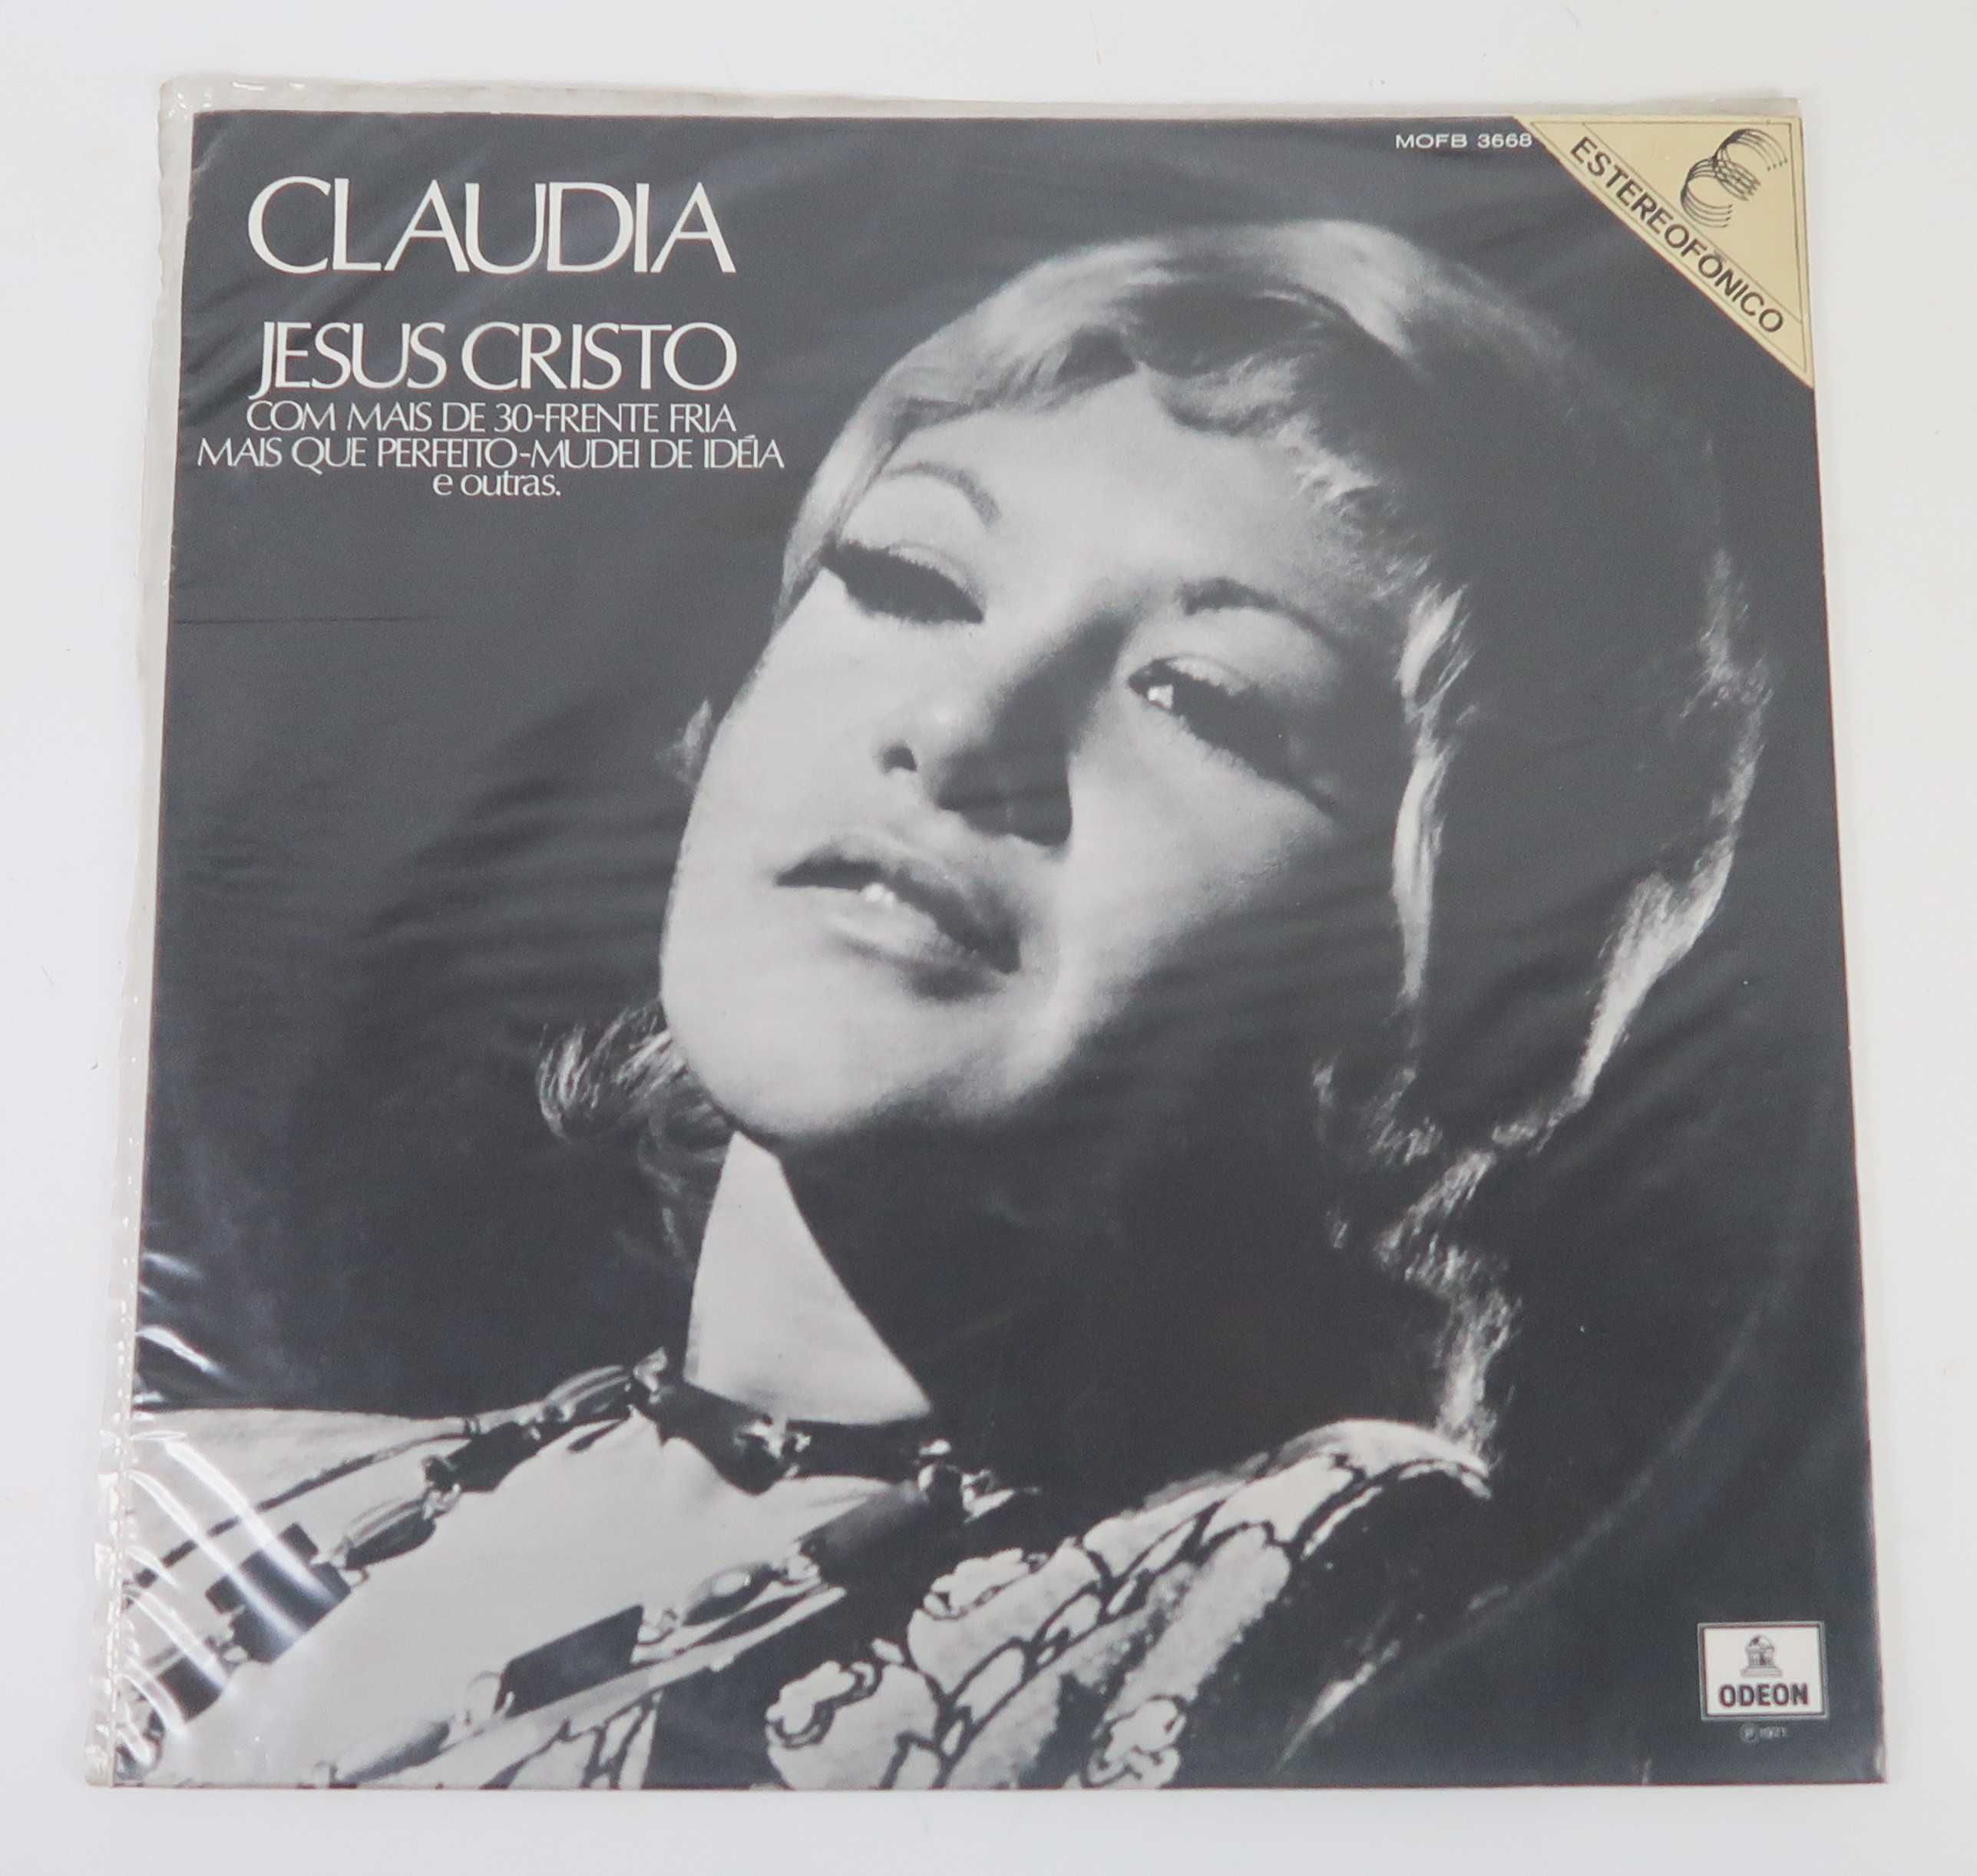 Claudia ‎– Jesus Cristo, Vinil, LP - Stereo (raro)